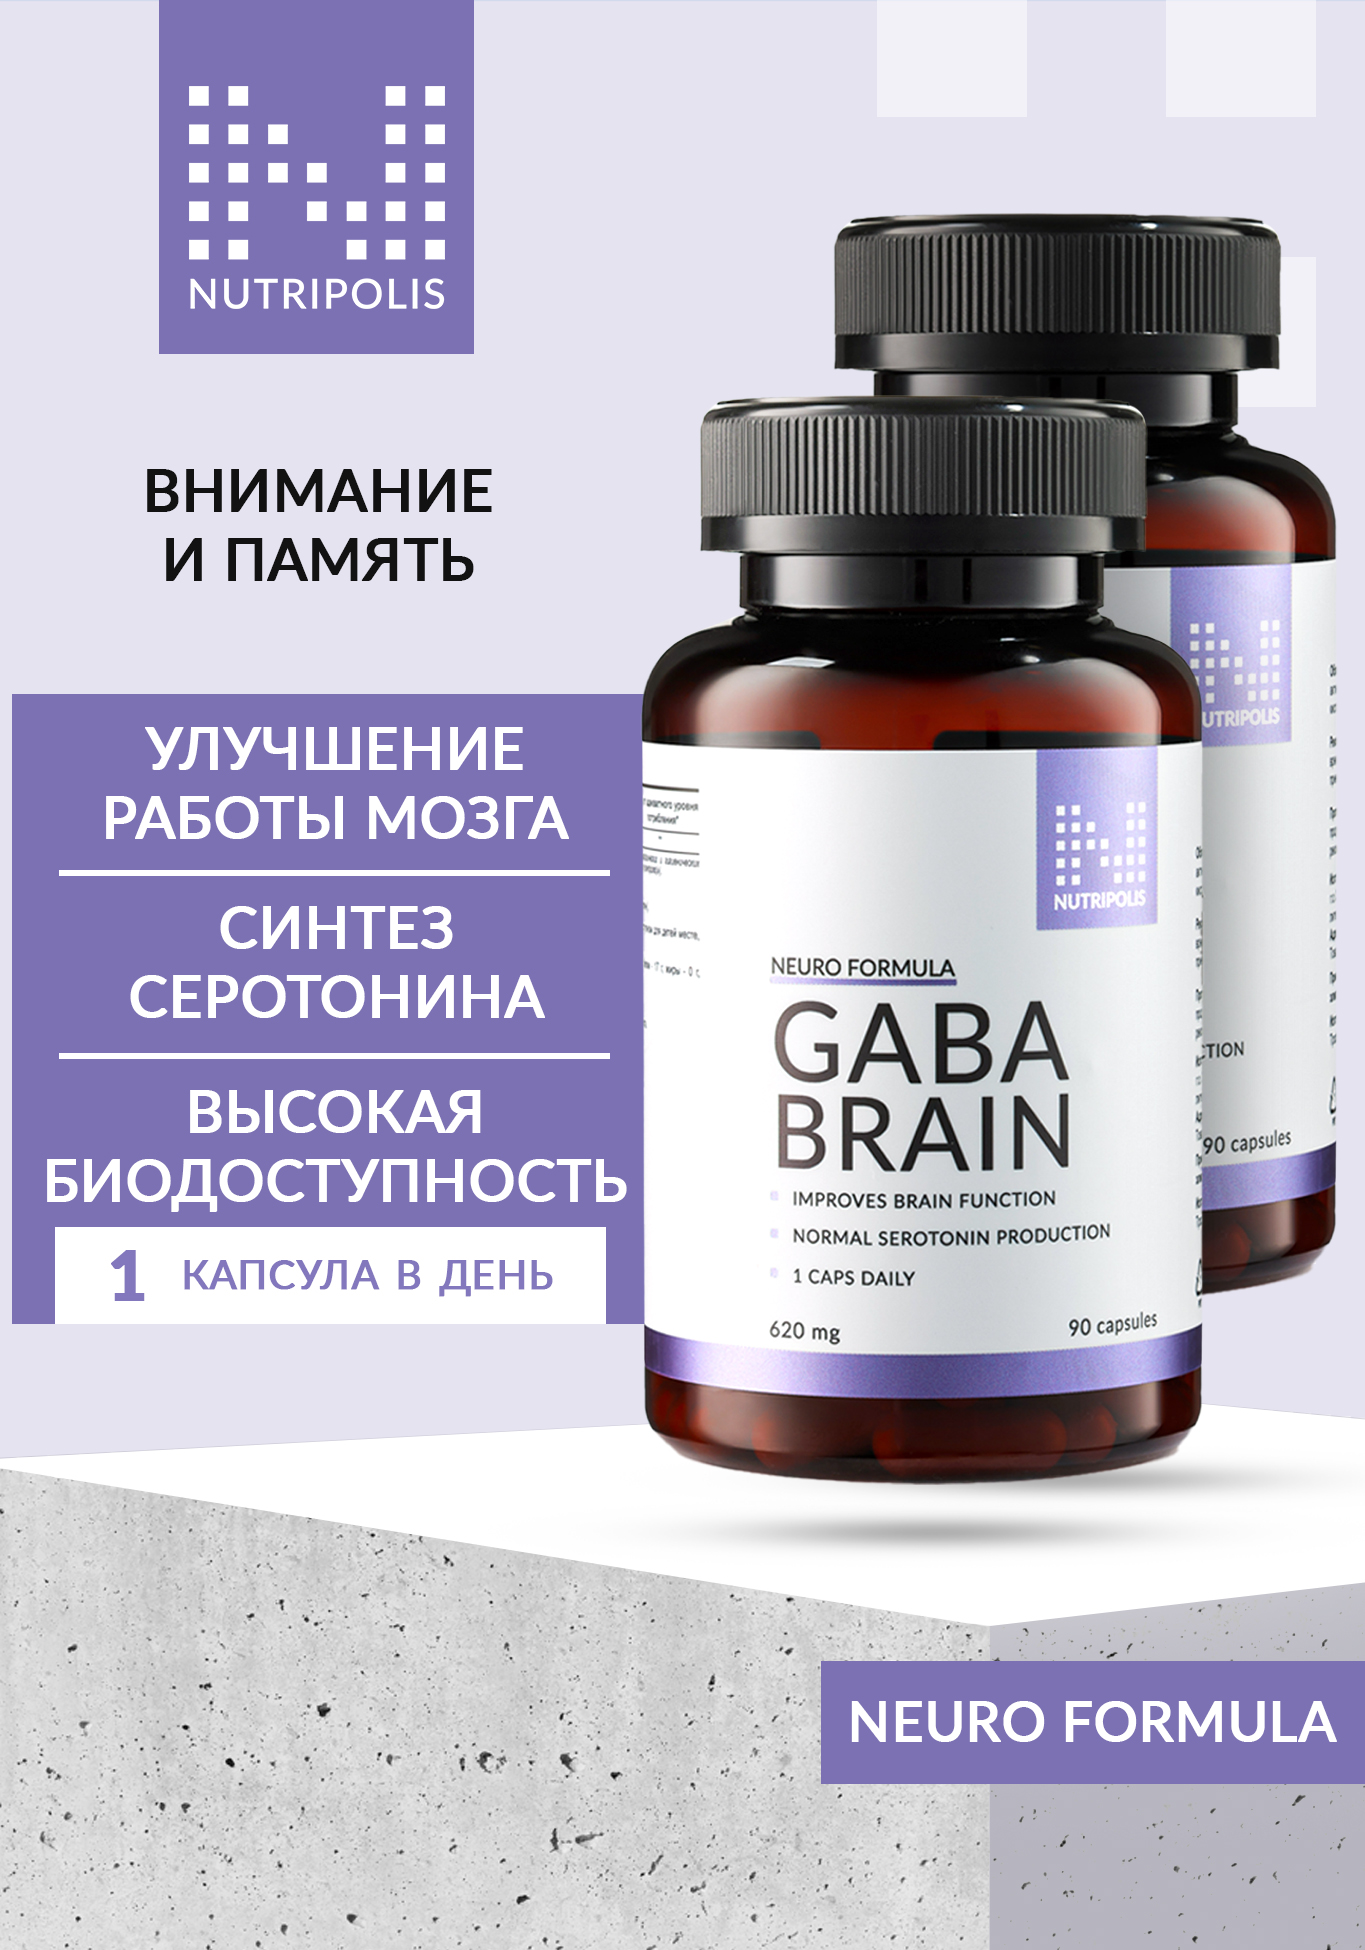 Gaba brain (Габа для мозга), 2 шт. NUTRIPOLIS